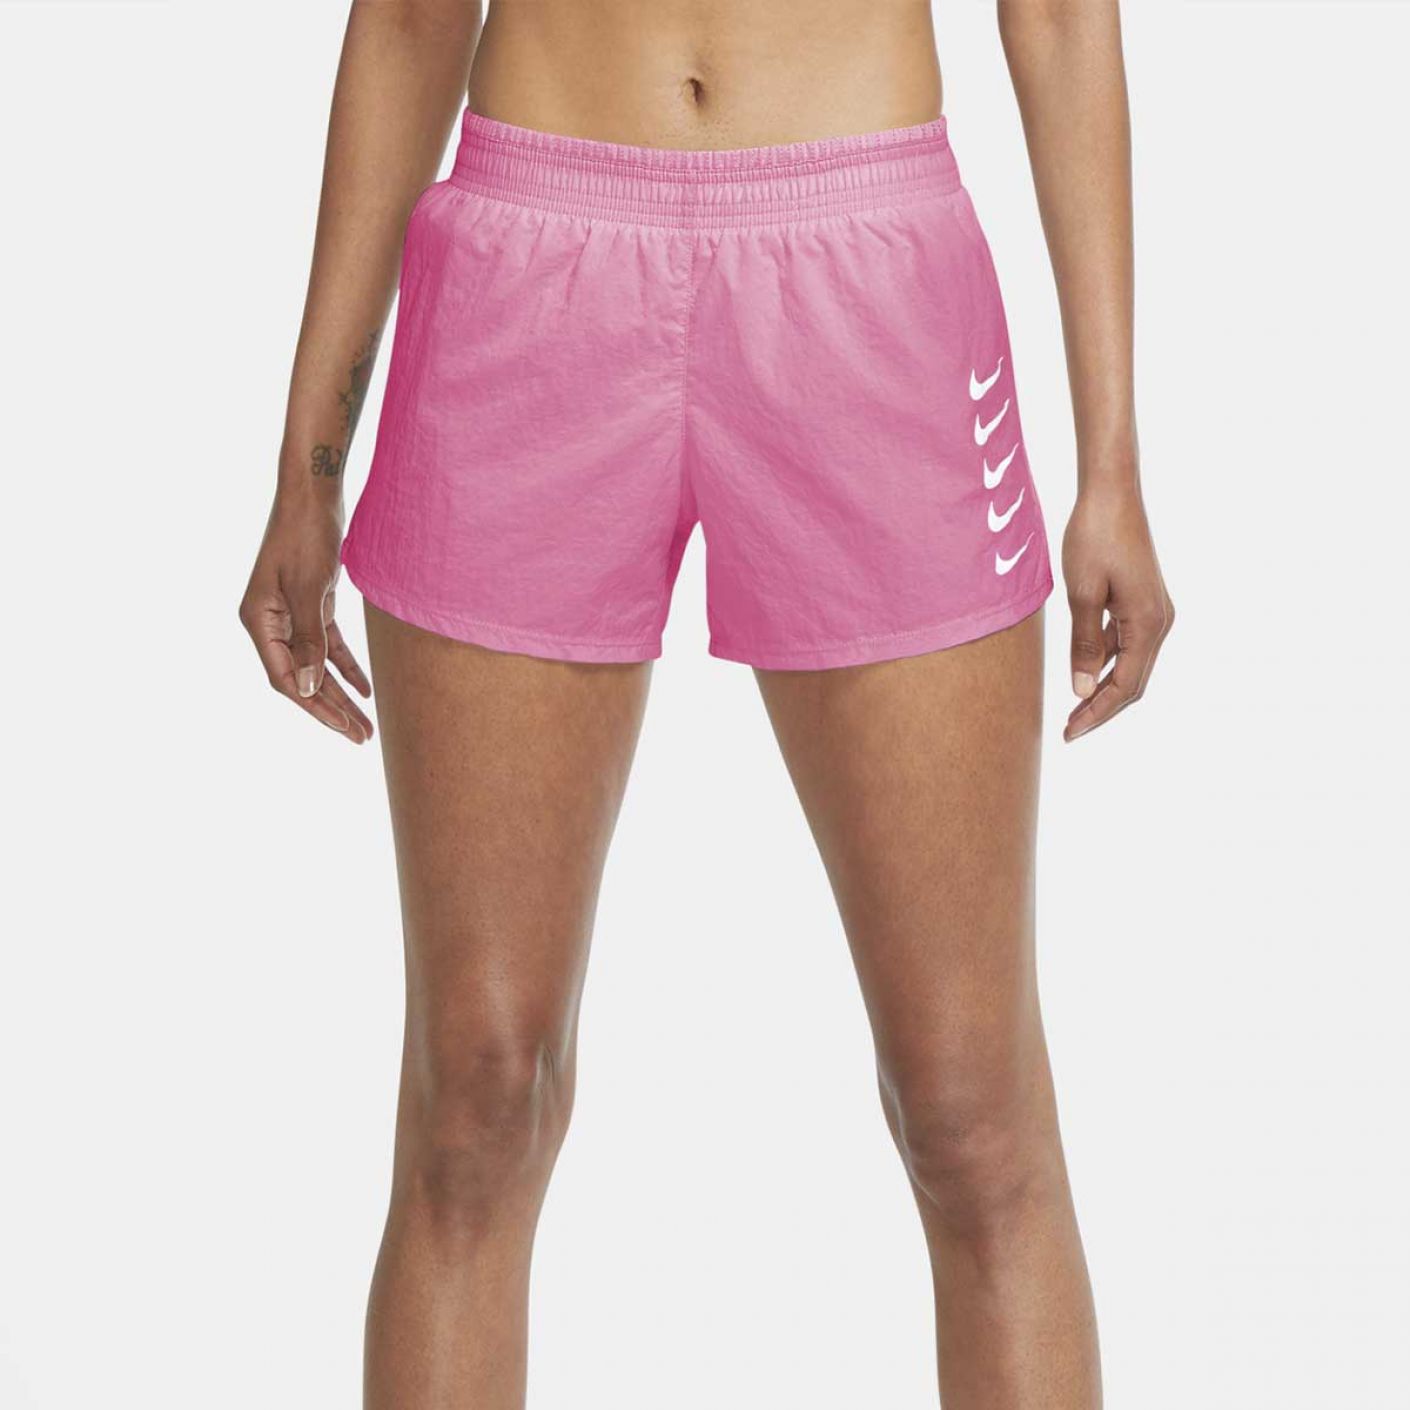 Nike Running Short Swoosh Pink for Women